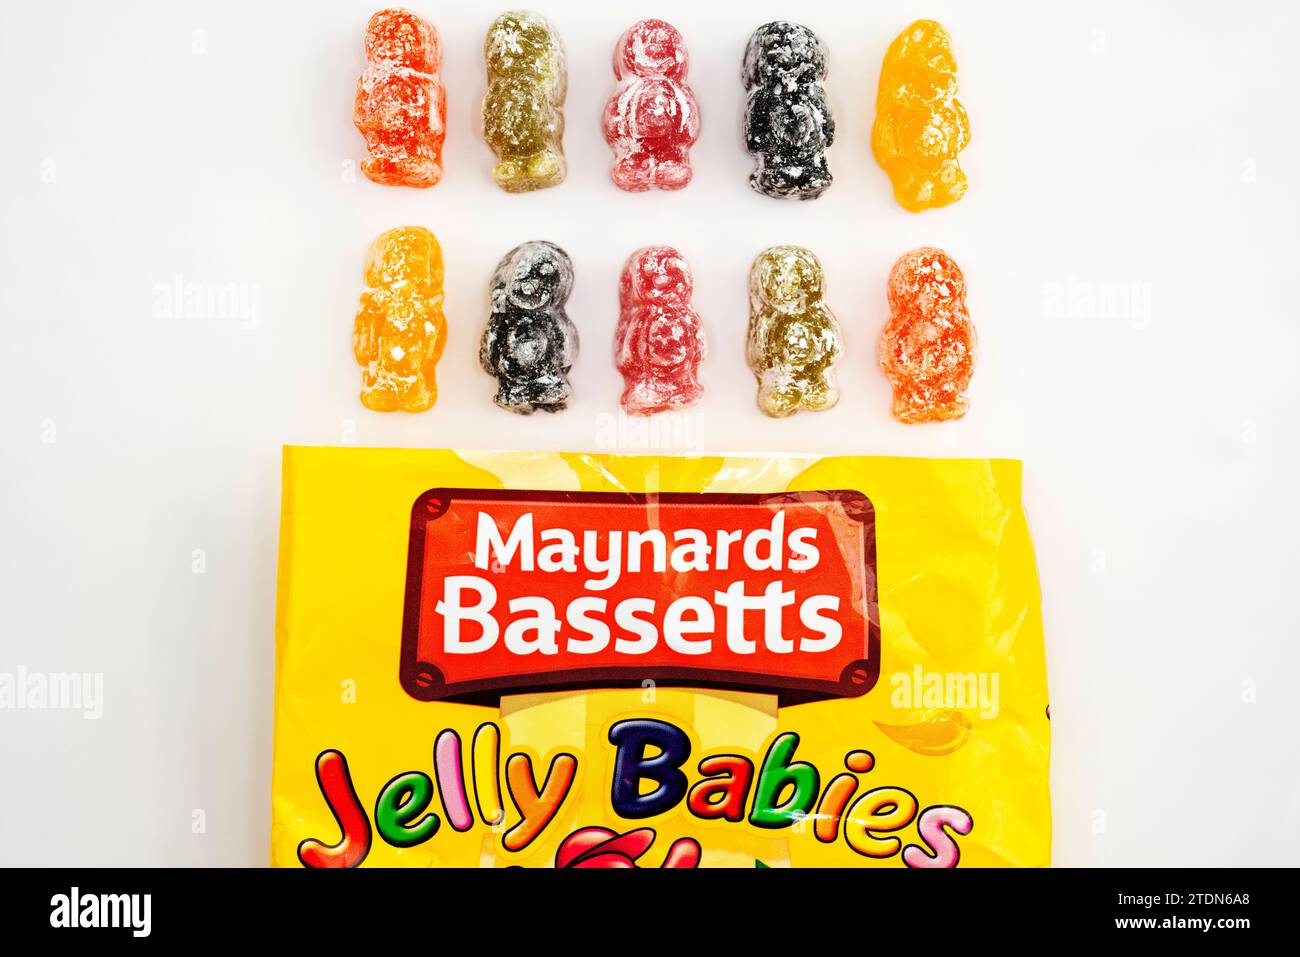 Maynards Bassetts jelly babies Stock Photo - Alamy